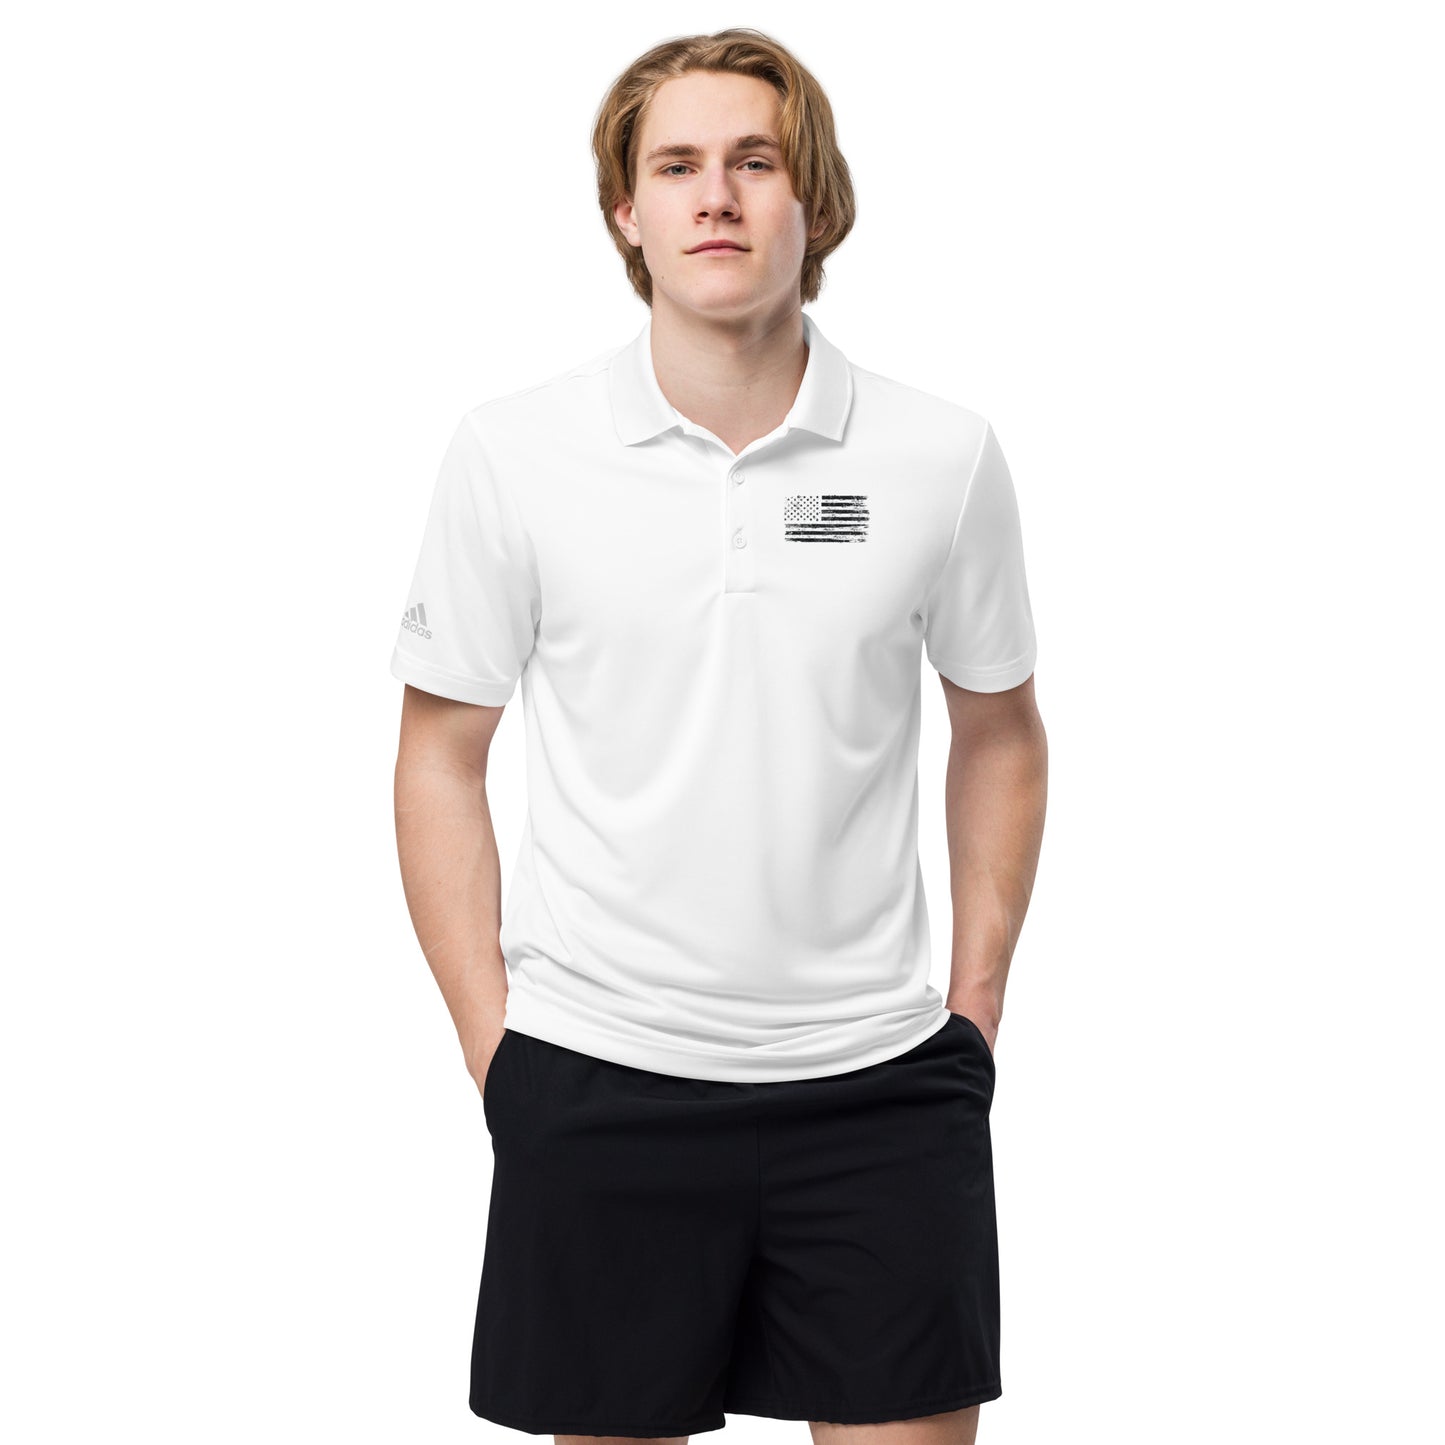 White adidas Polo Shirt - Black Stars USA Flag